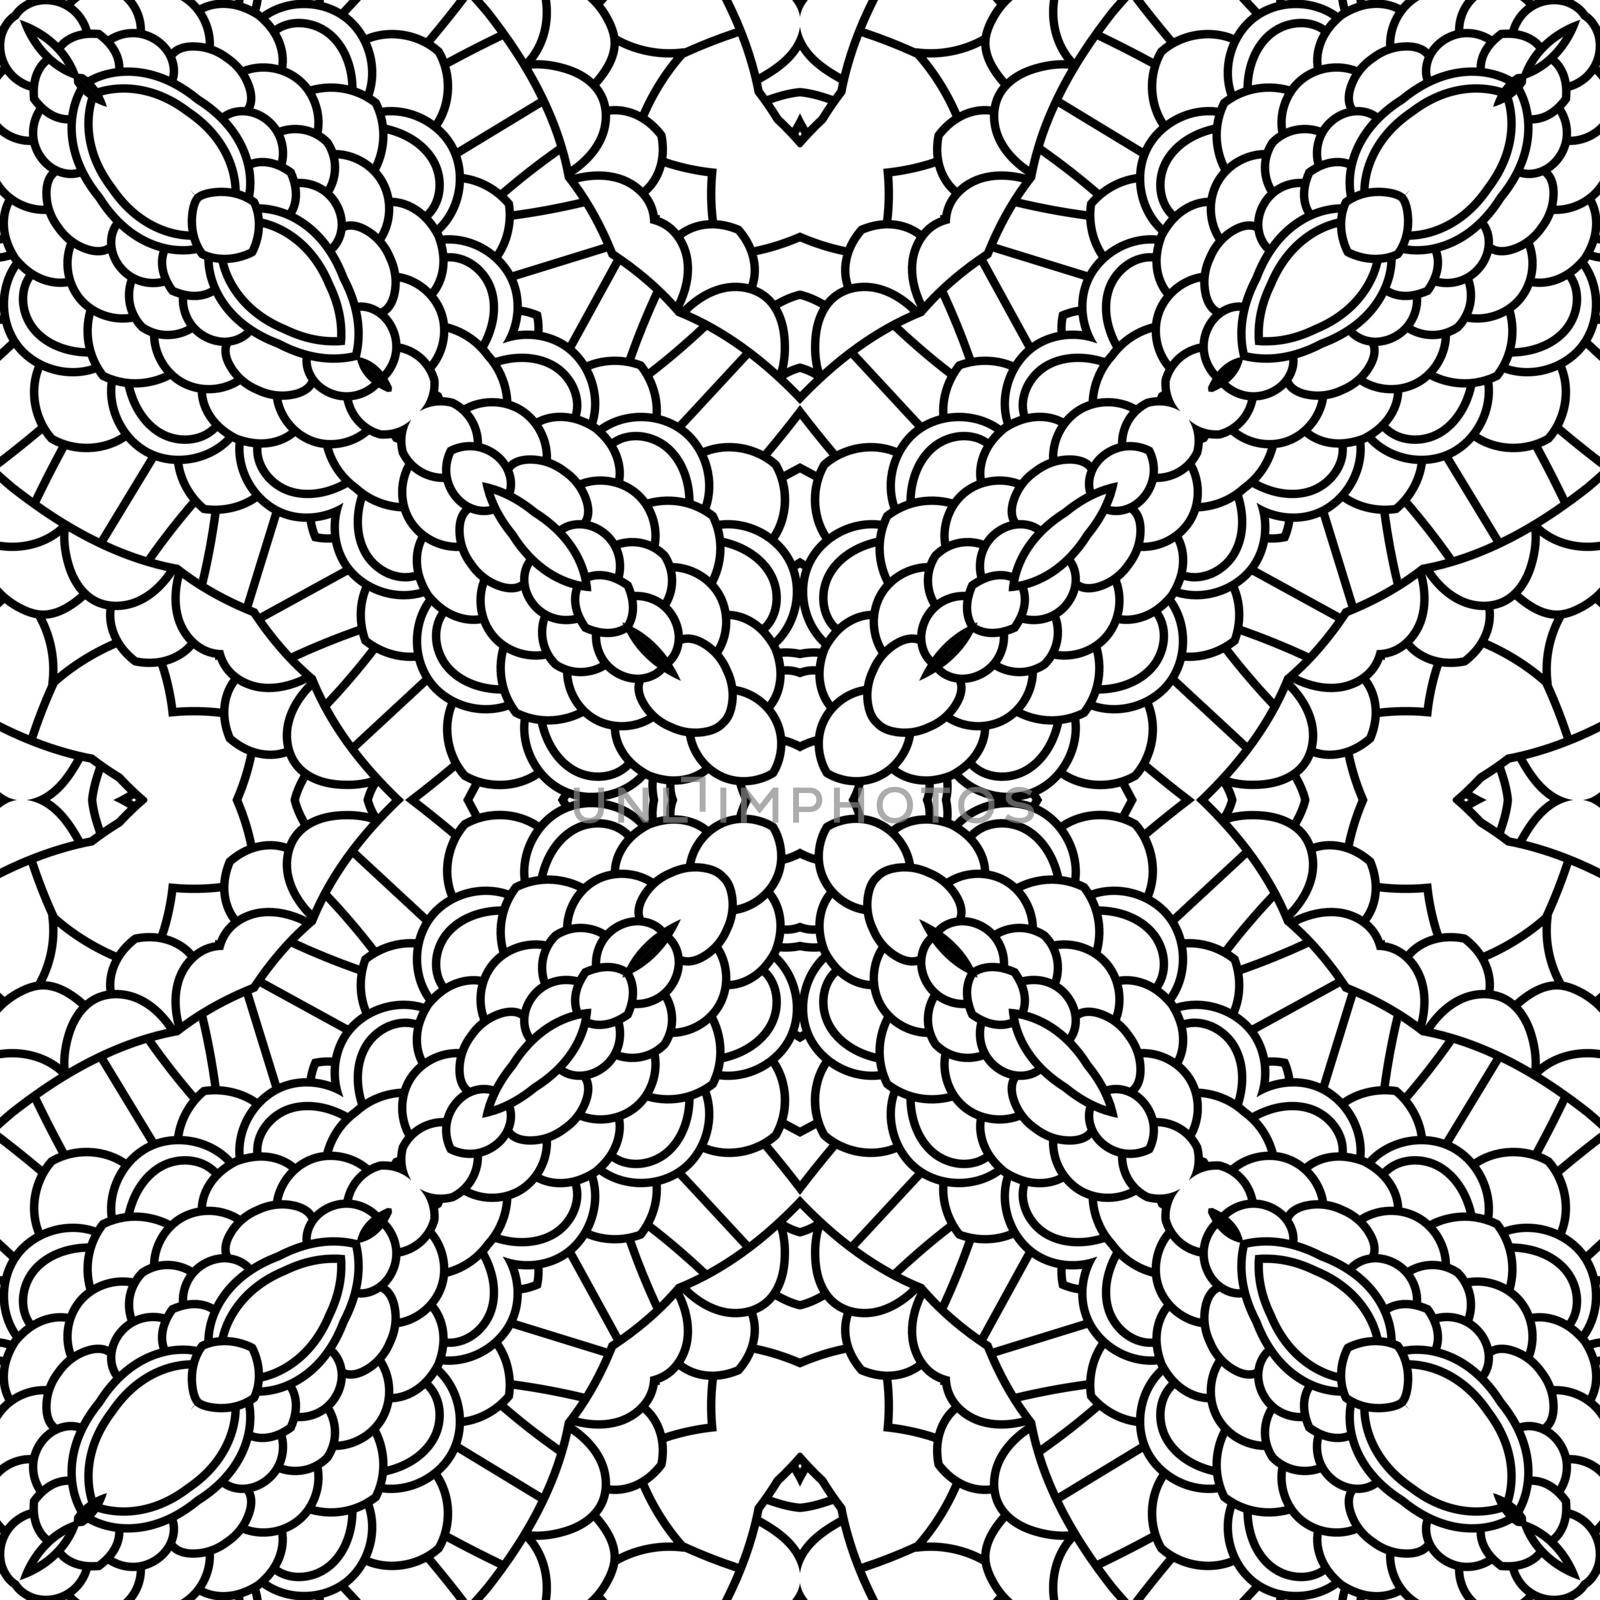 Mandala. Round Ornament Pattern. Vintage black and white decorative elements. Hand drawn background. Islam, Arabic, Indian, ottoman motifs. Isolated on white background. by allaku